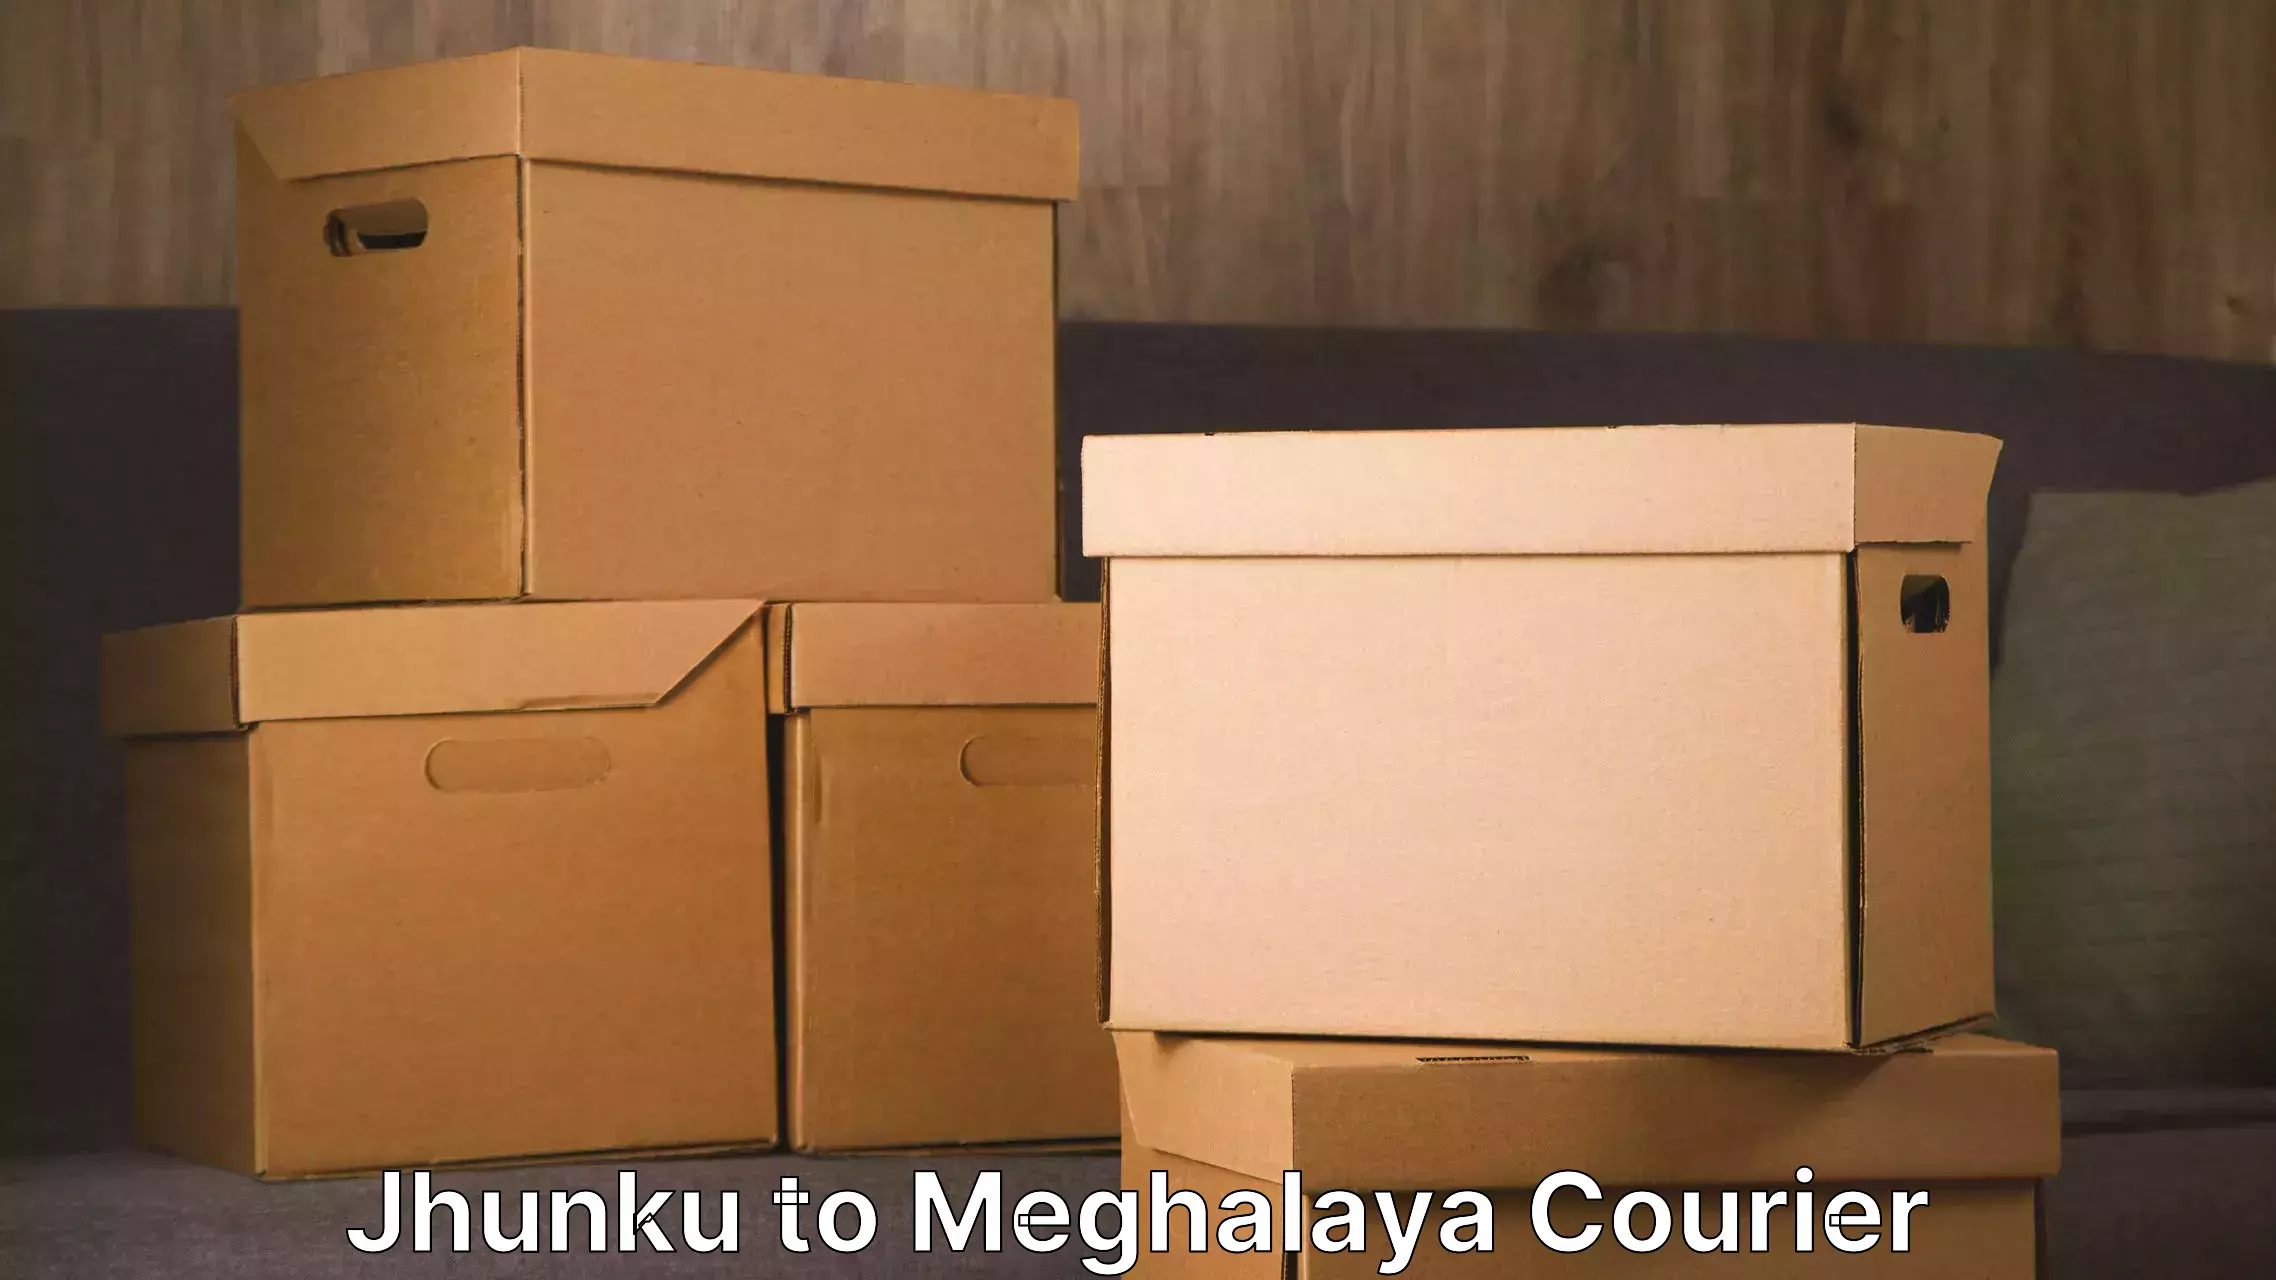 Specialized moving company Jhunku to Shillong